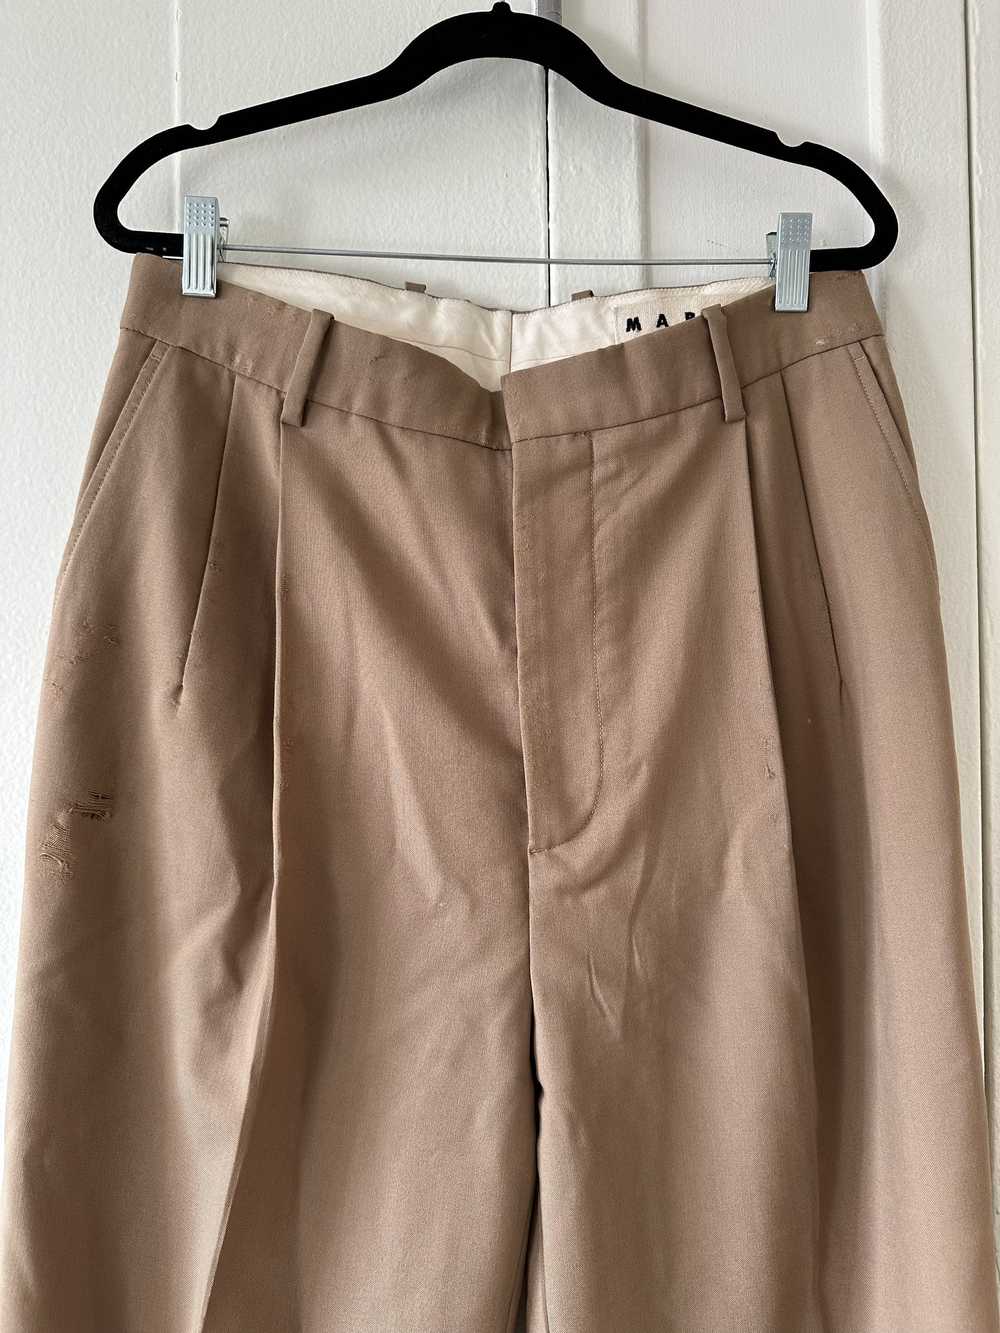 Marni Marni Pleated Trousers - image 2